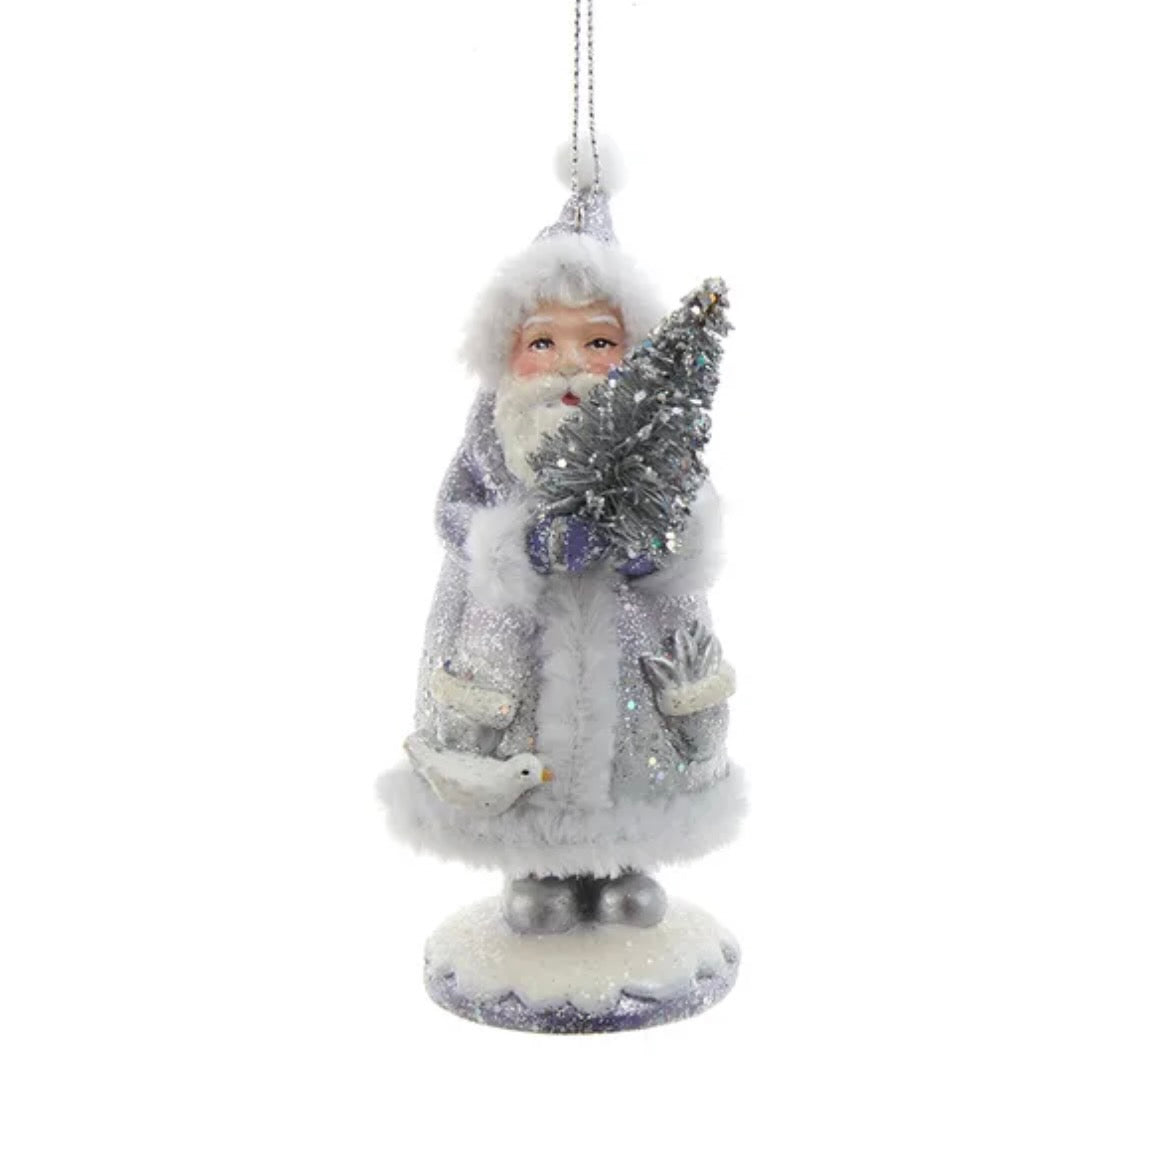 Lavender Belsnickel Santa Ornament with Tree